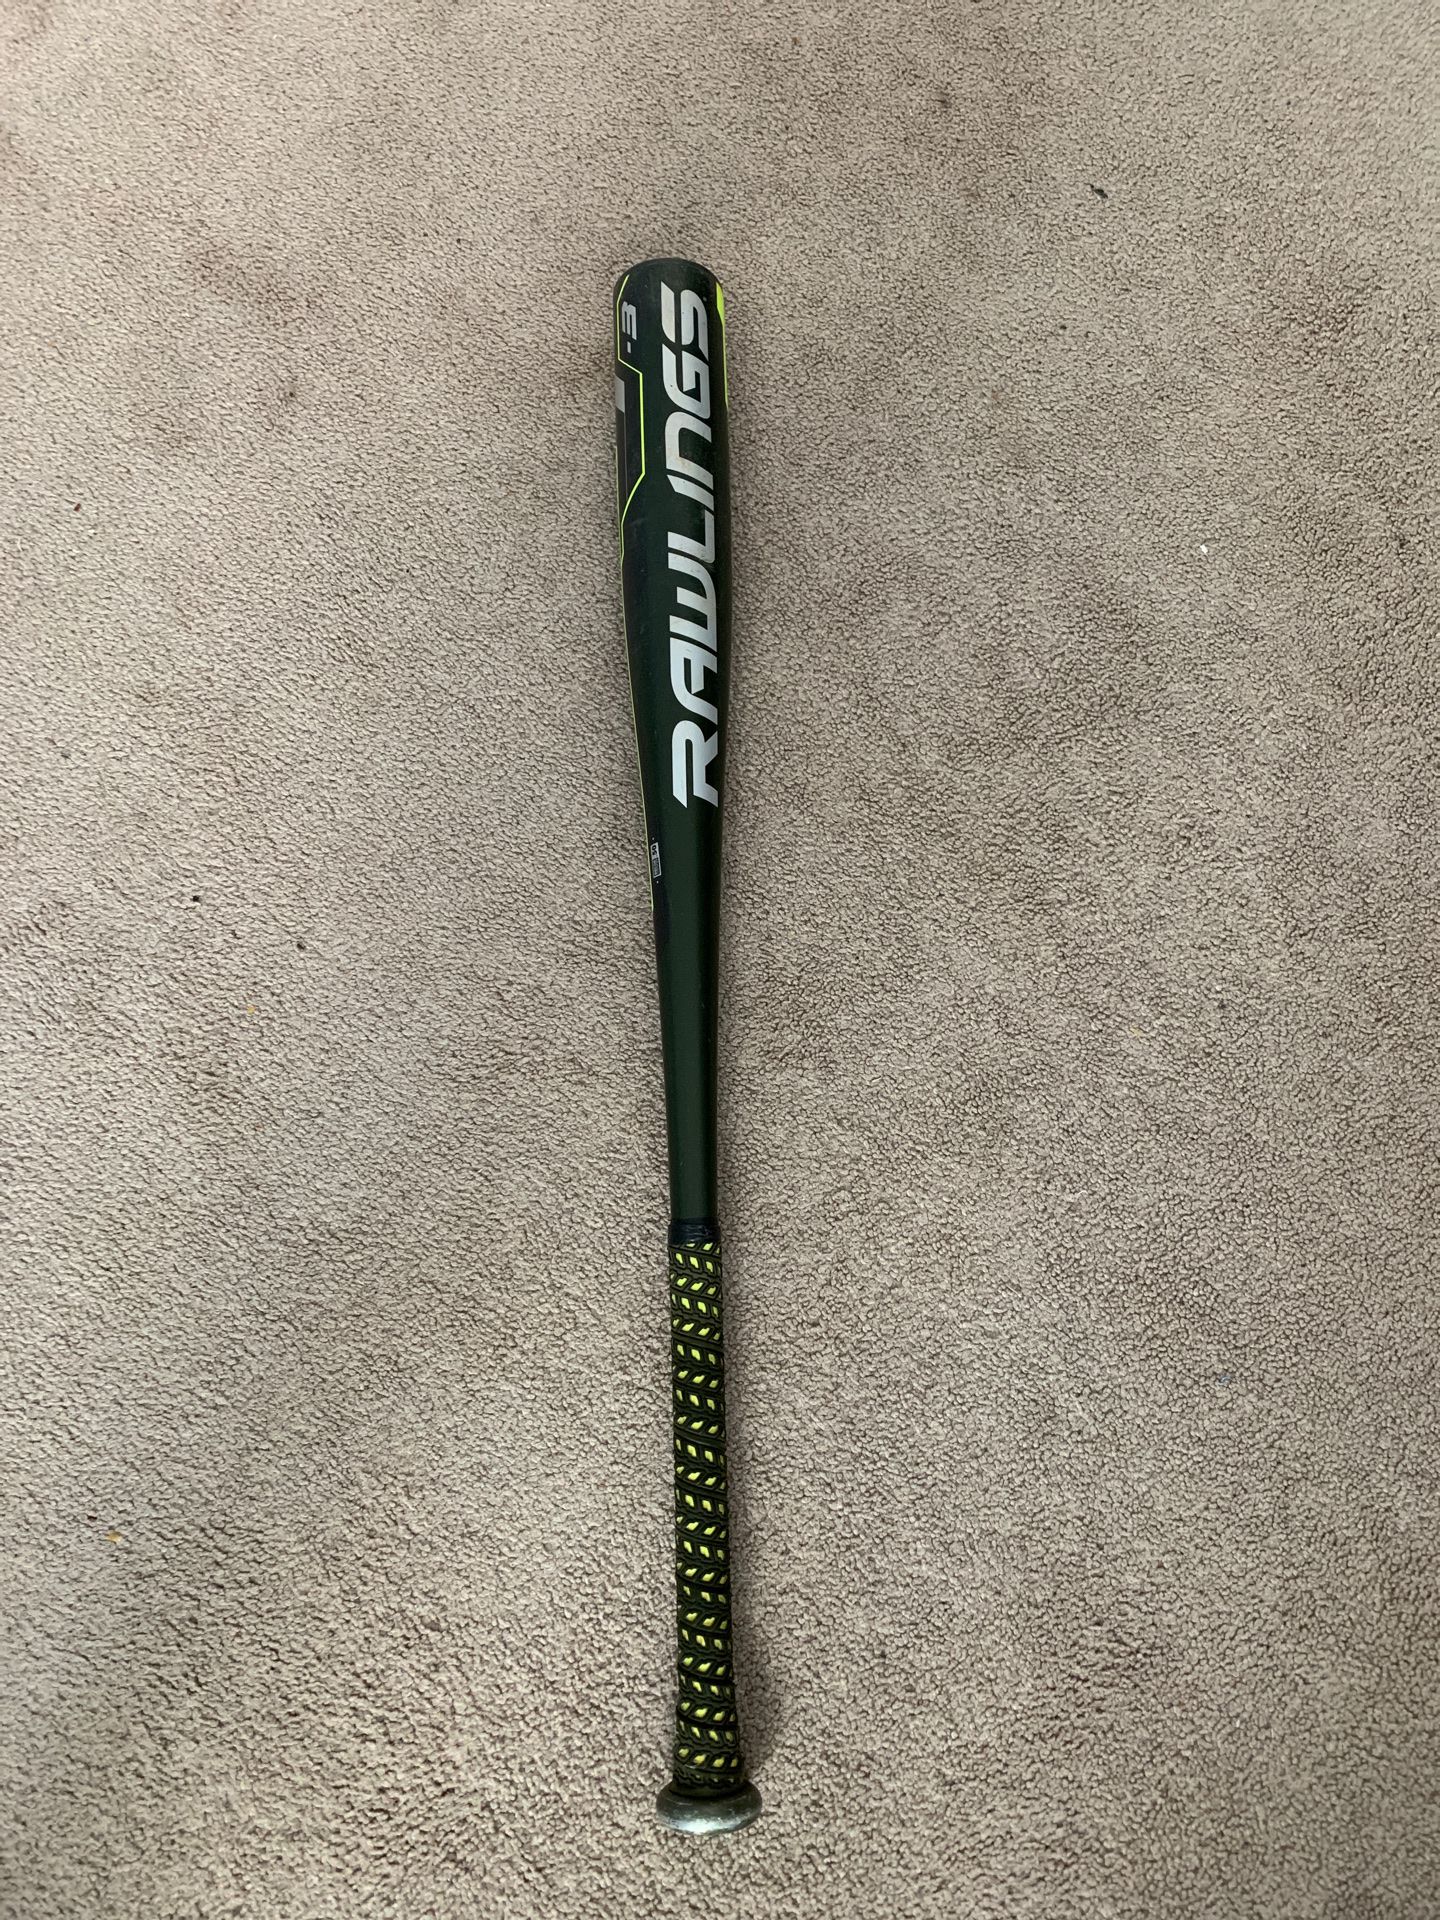 2019 Rawlings prodigy BBCOR baseball bat -3, 29 oz, 32 inches